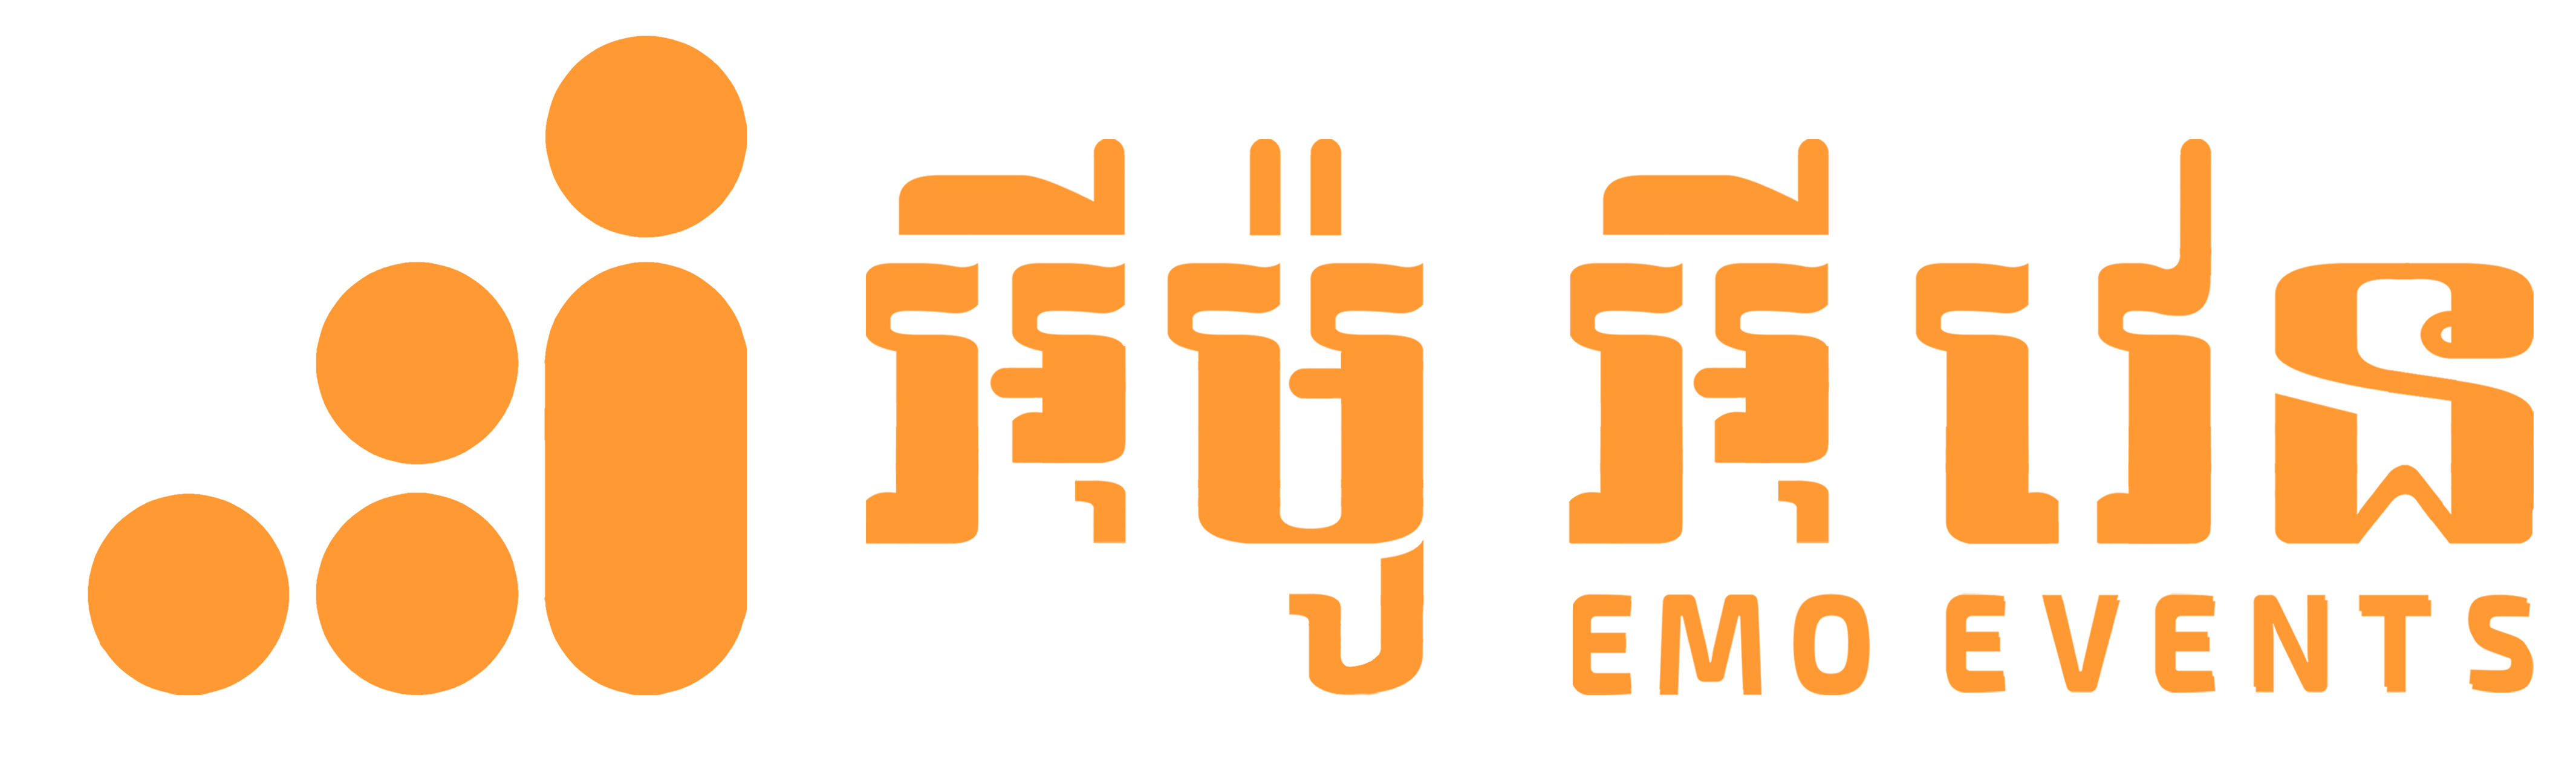 emo events official logo